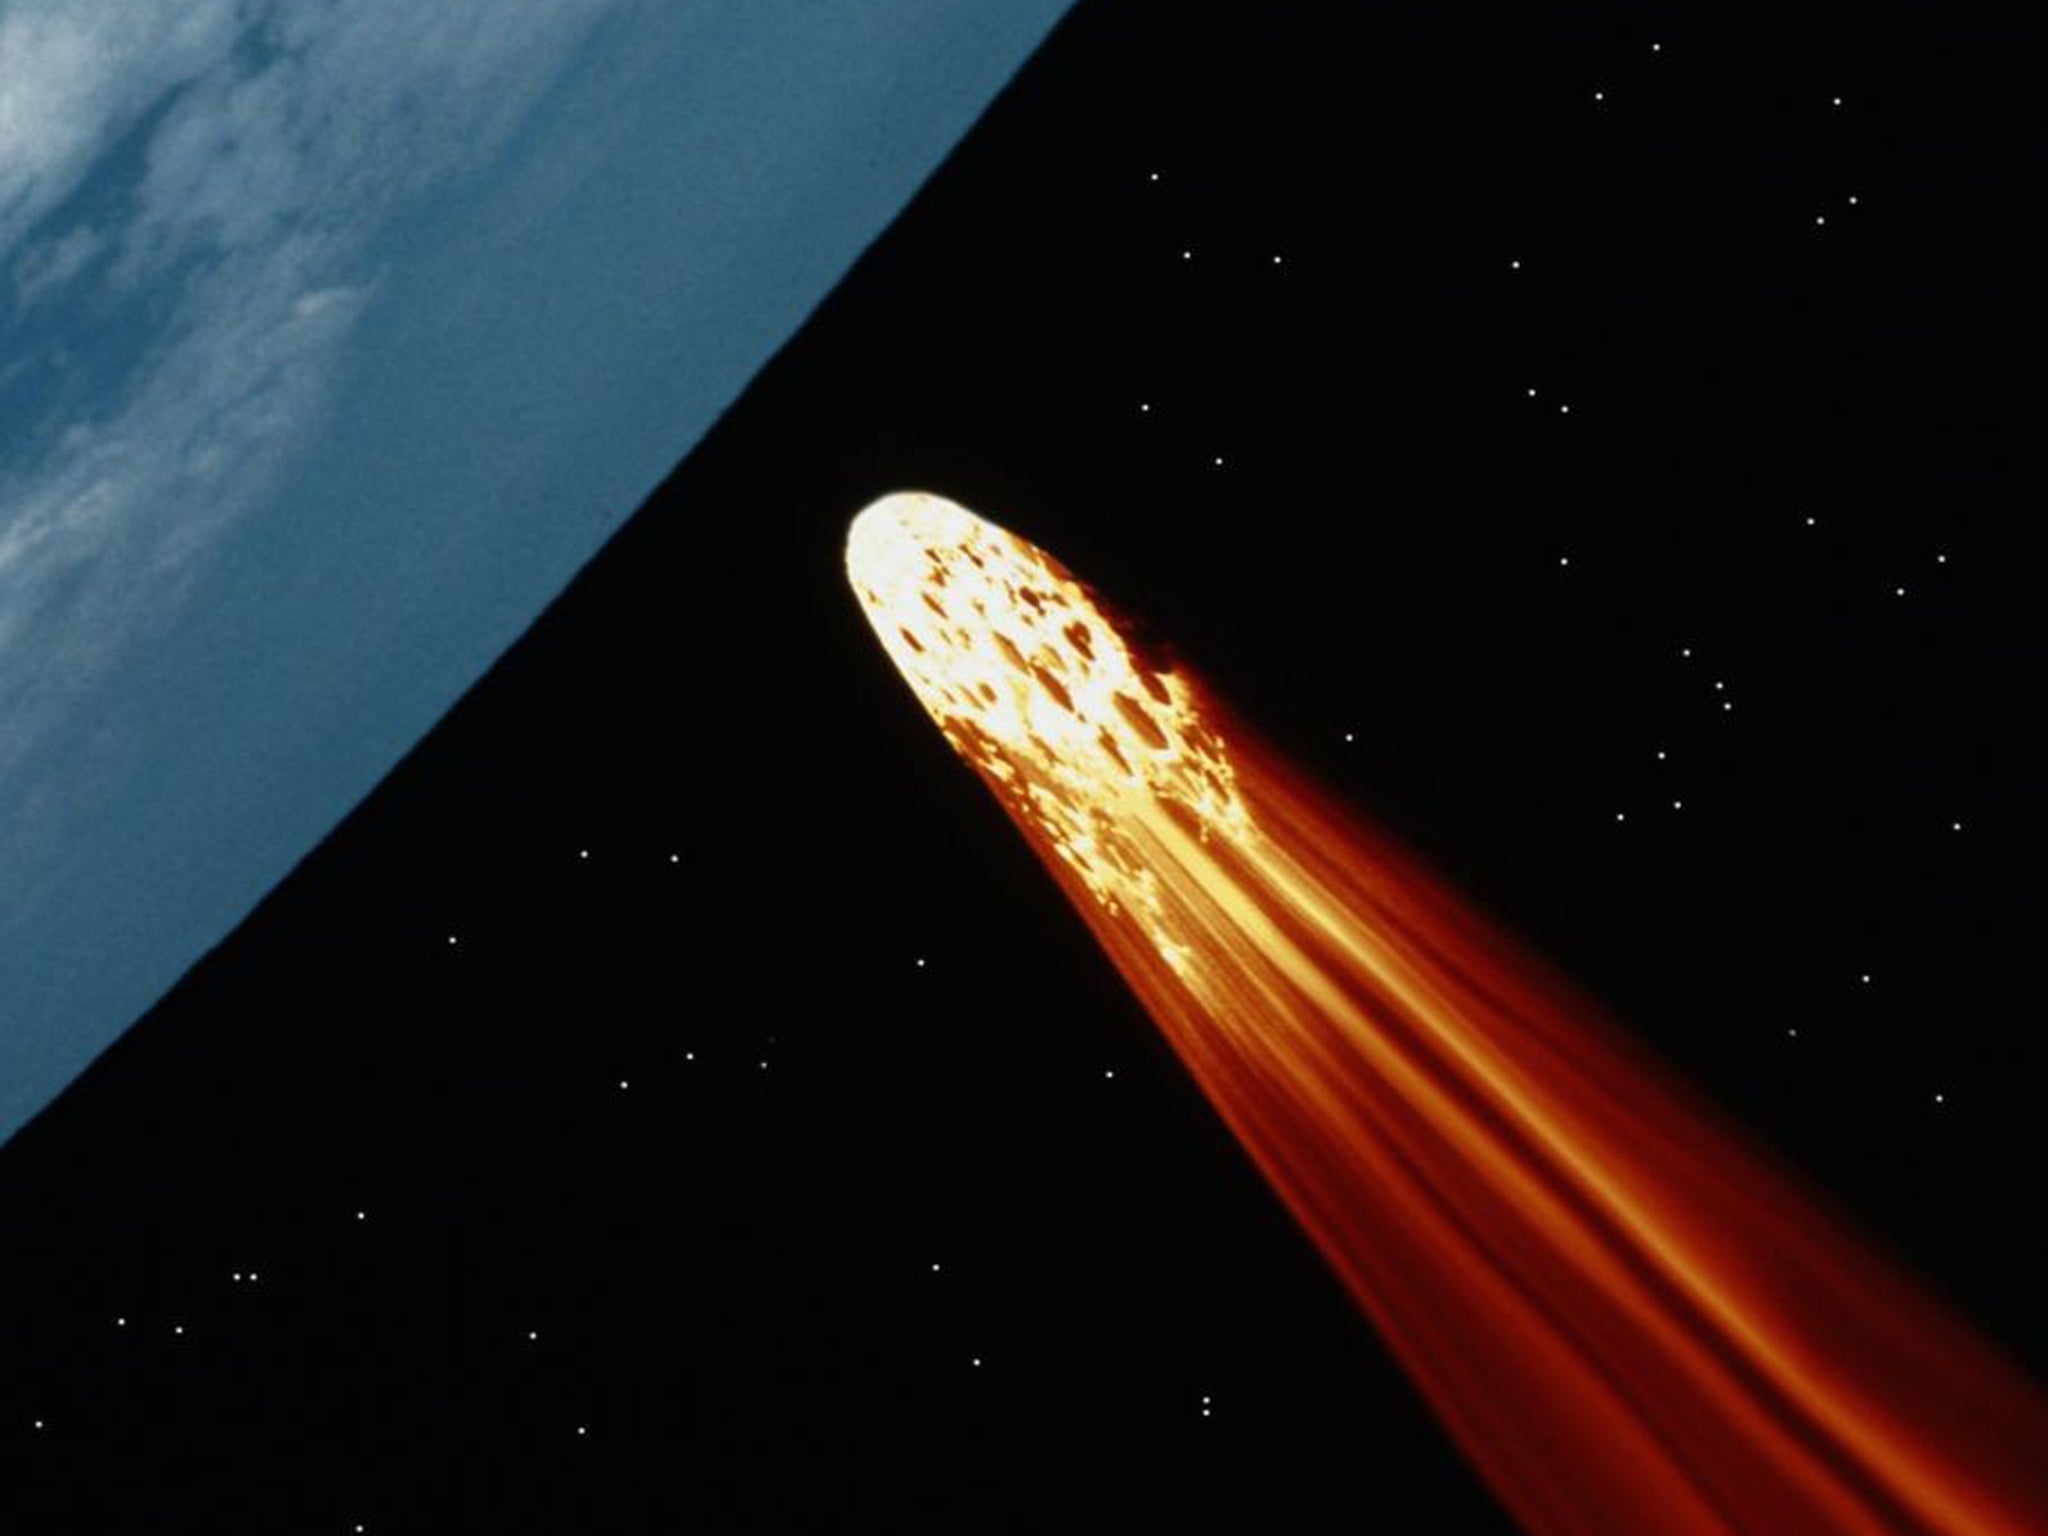 2012 DA14: A close call for asteroid big enough to flatten London | The ...